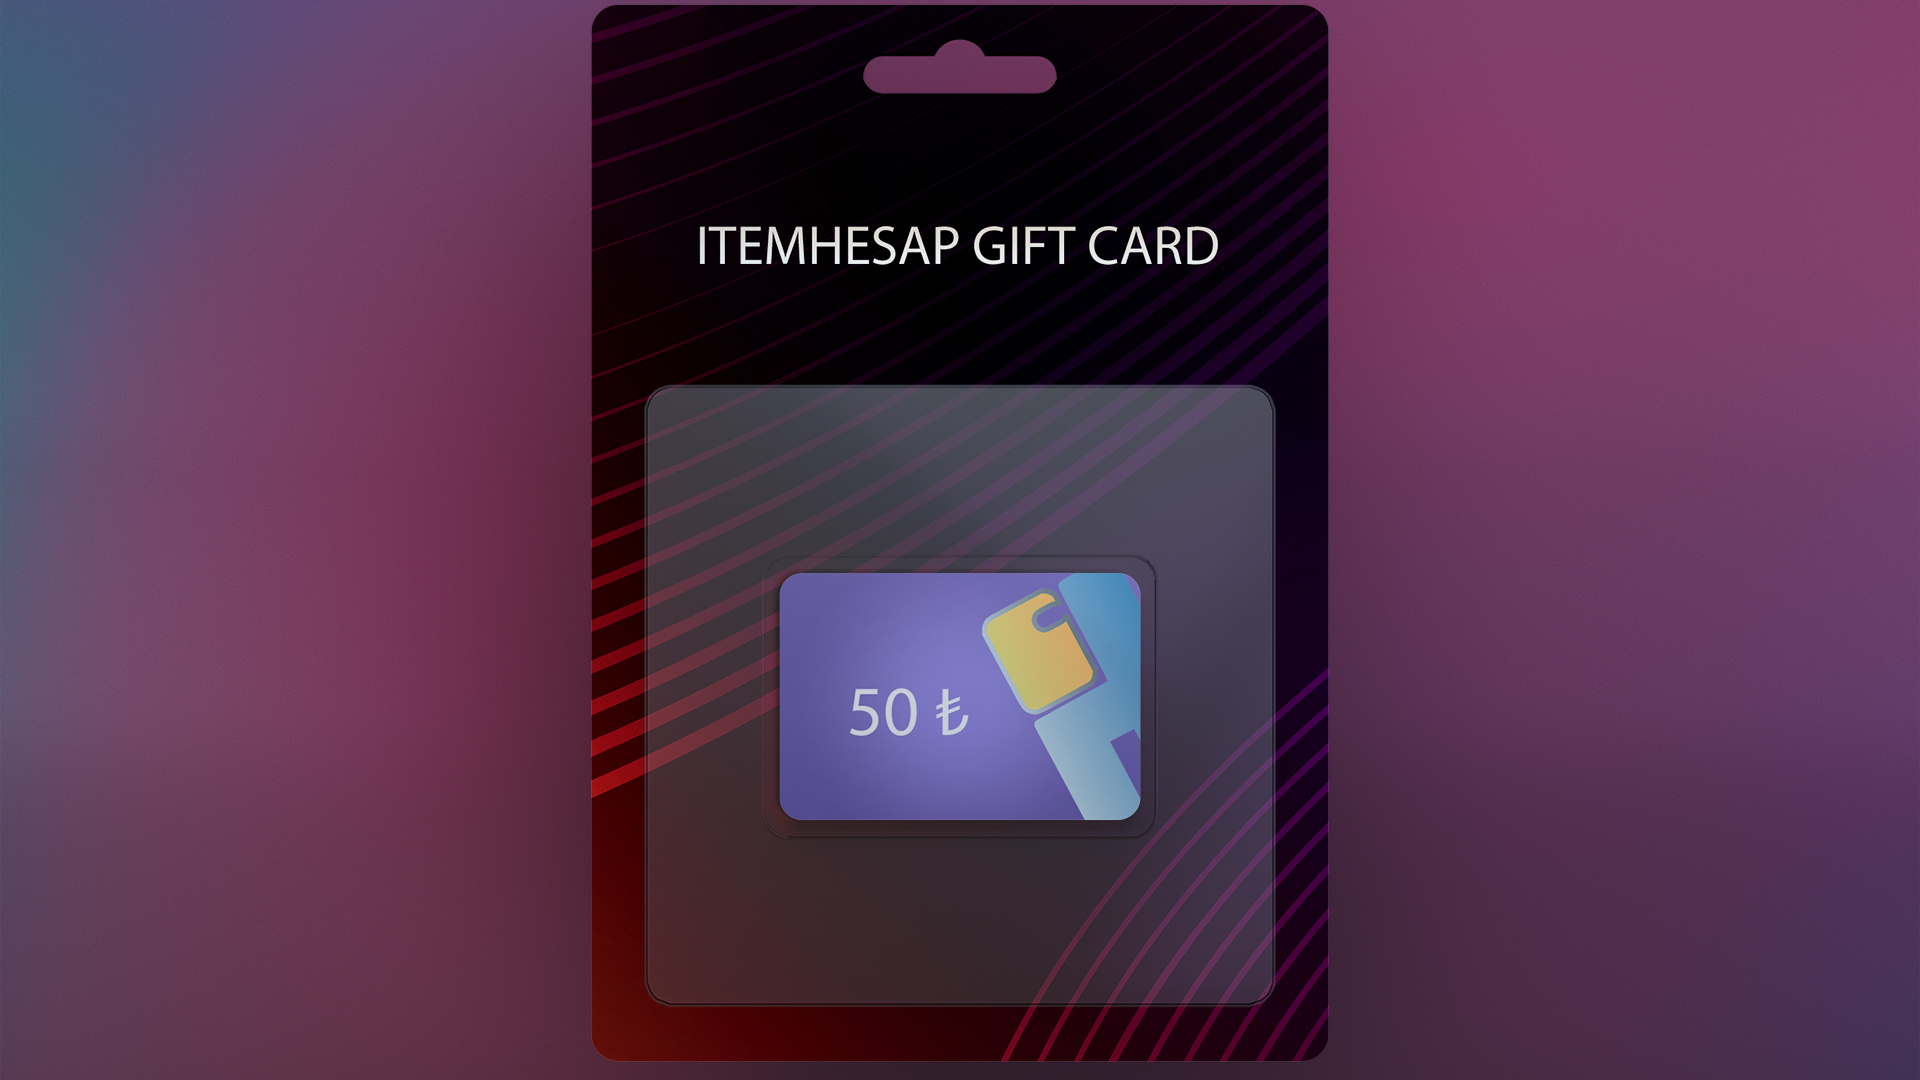 ItemHesap ₺50 Gift Card $3.53